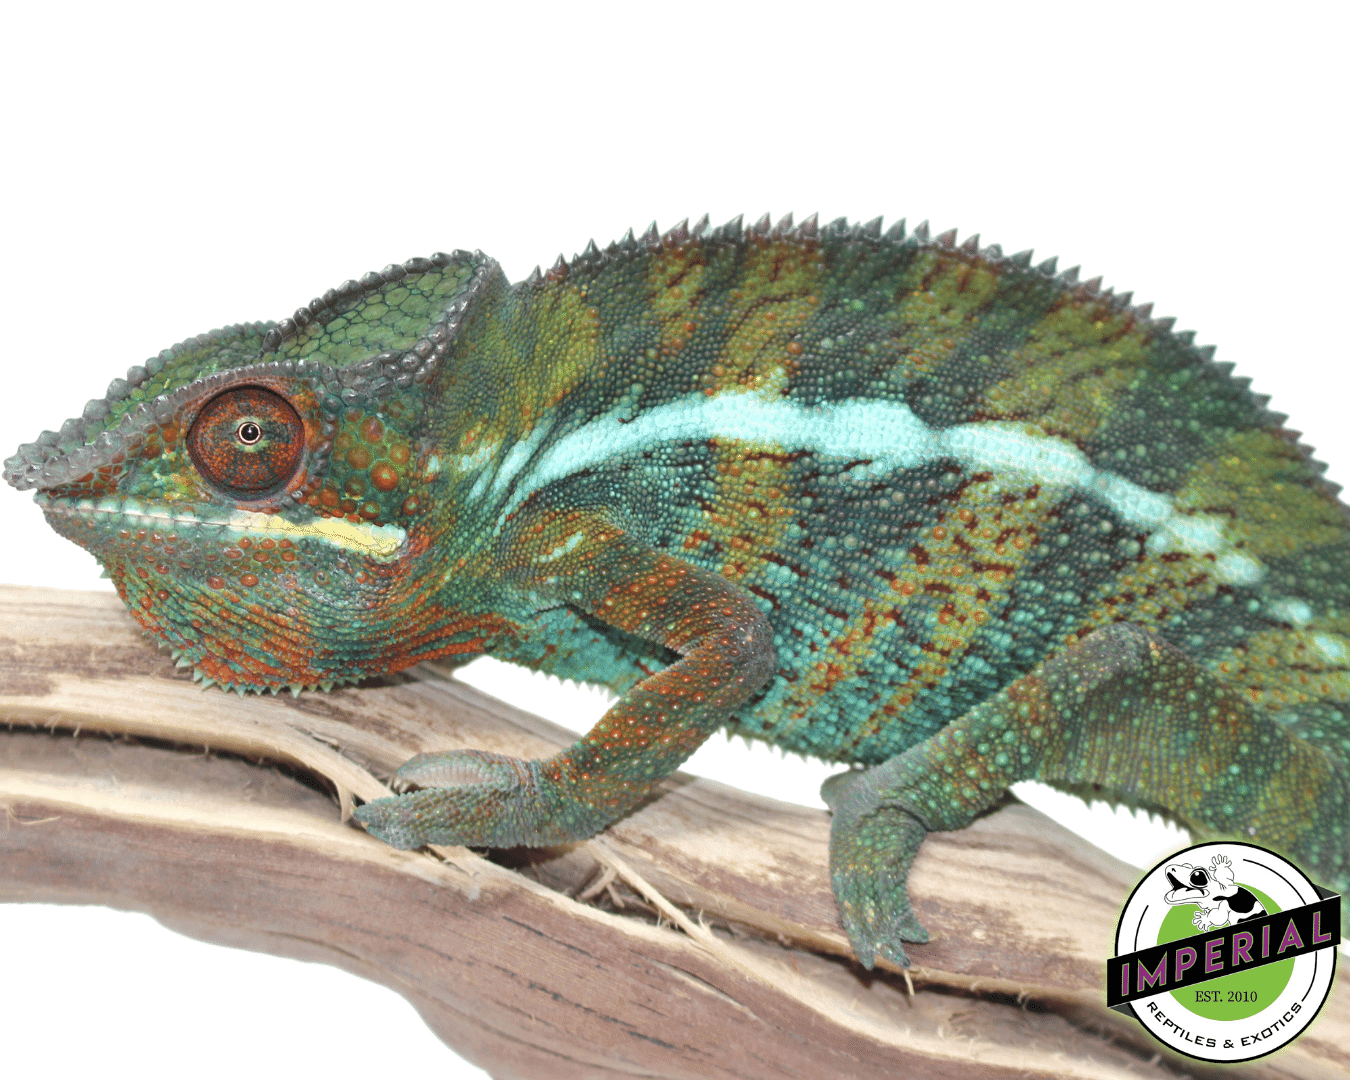 sambava panther chameleon for sale, buy reptiles online